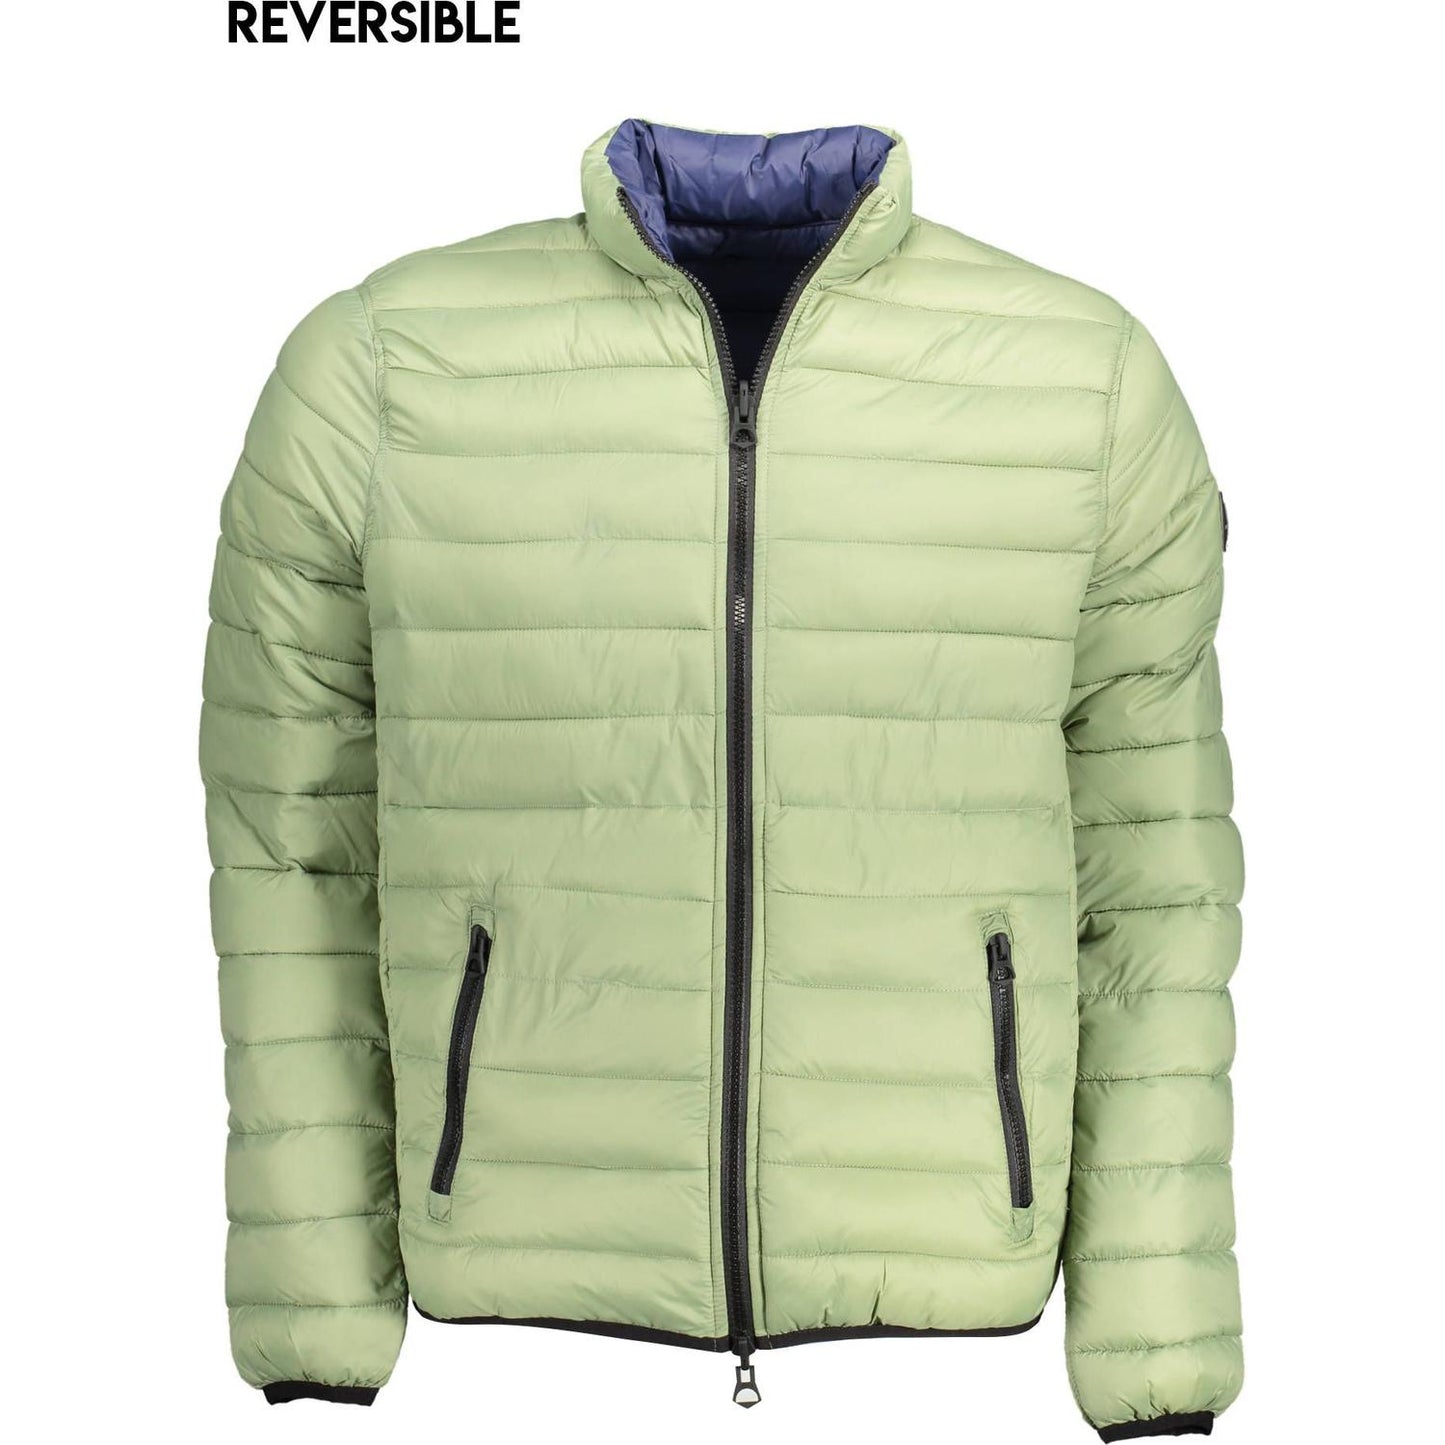 U.S. POLO ASSN. Chic Reversible Long-Sleeve Jacket chic-reversible-long-sleeve-jacket